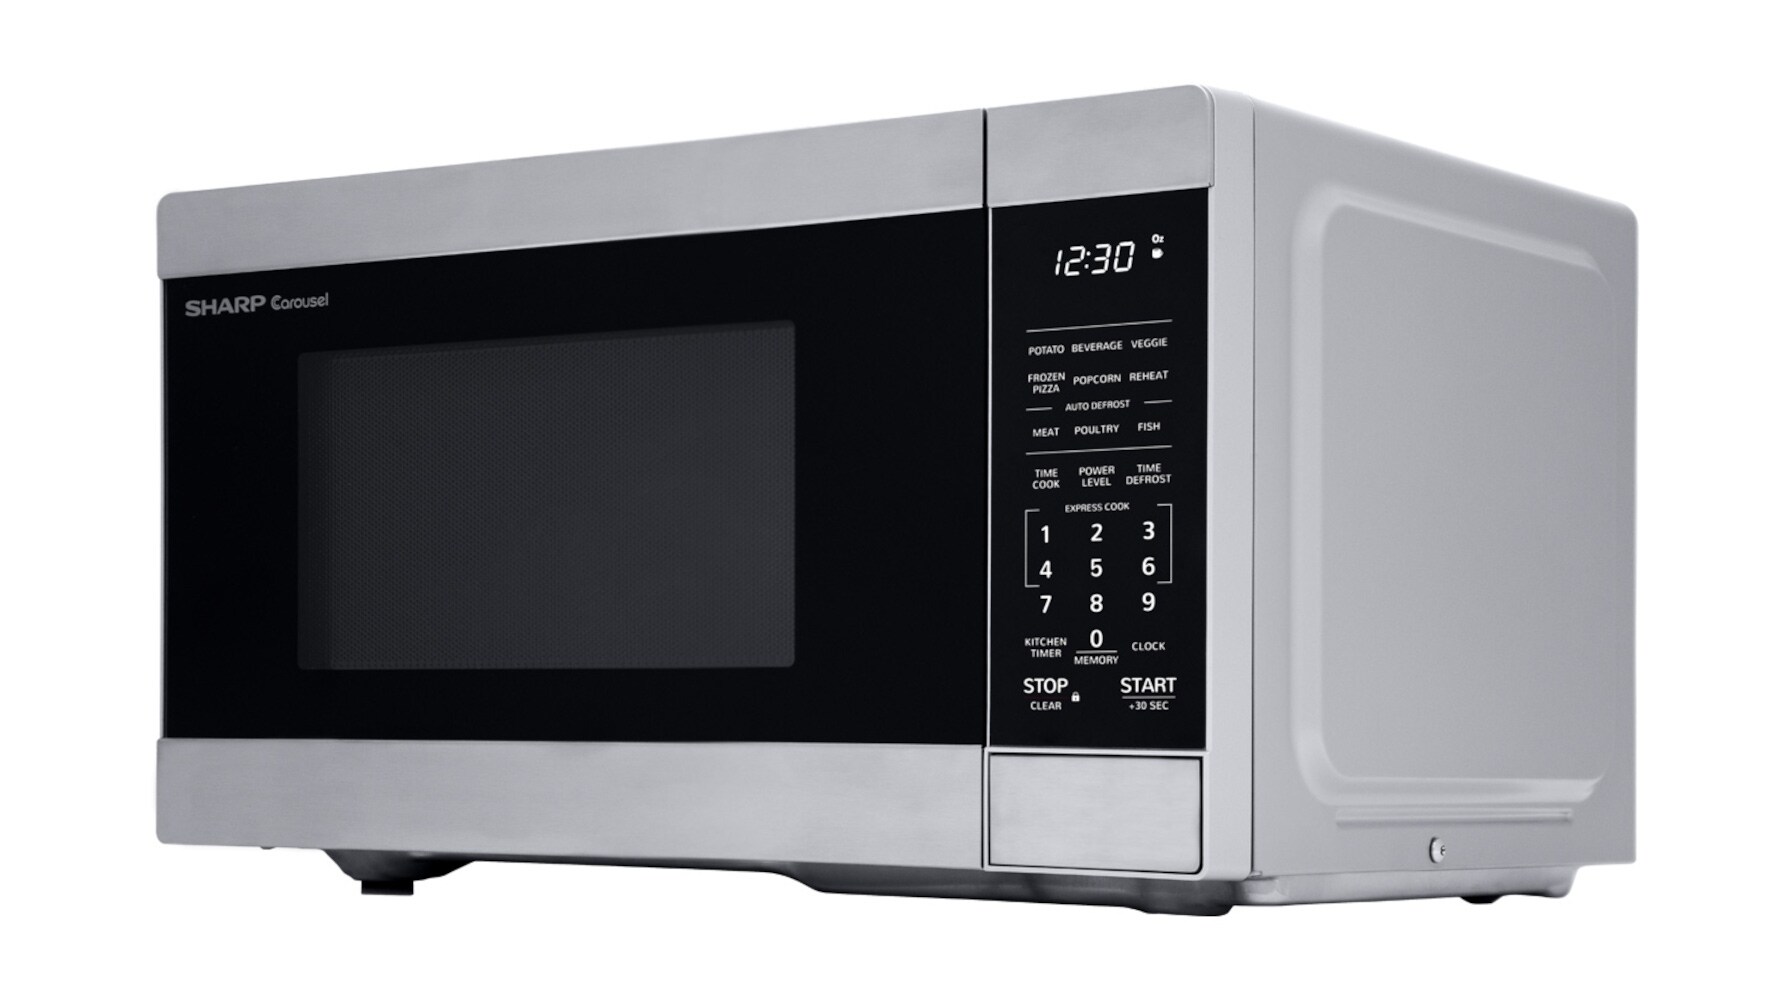 Sharp 1.1 Cu. ft. Black Countertop Microwave Oven